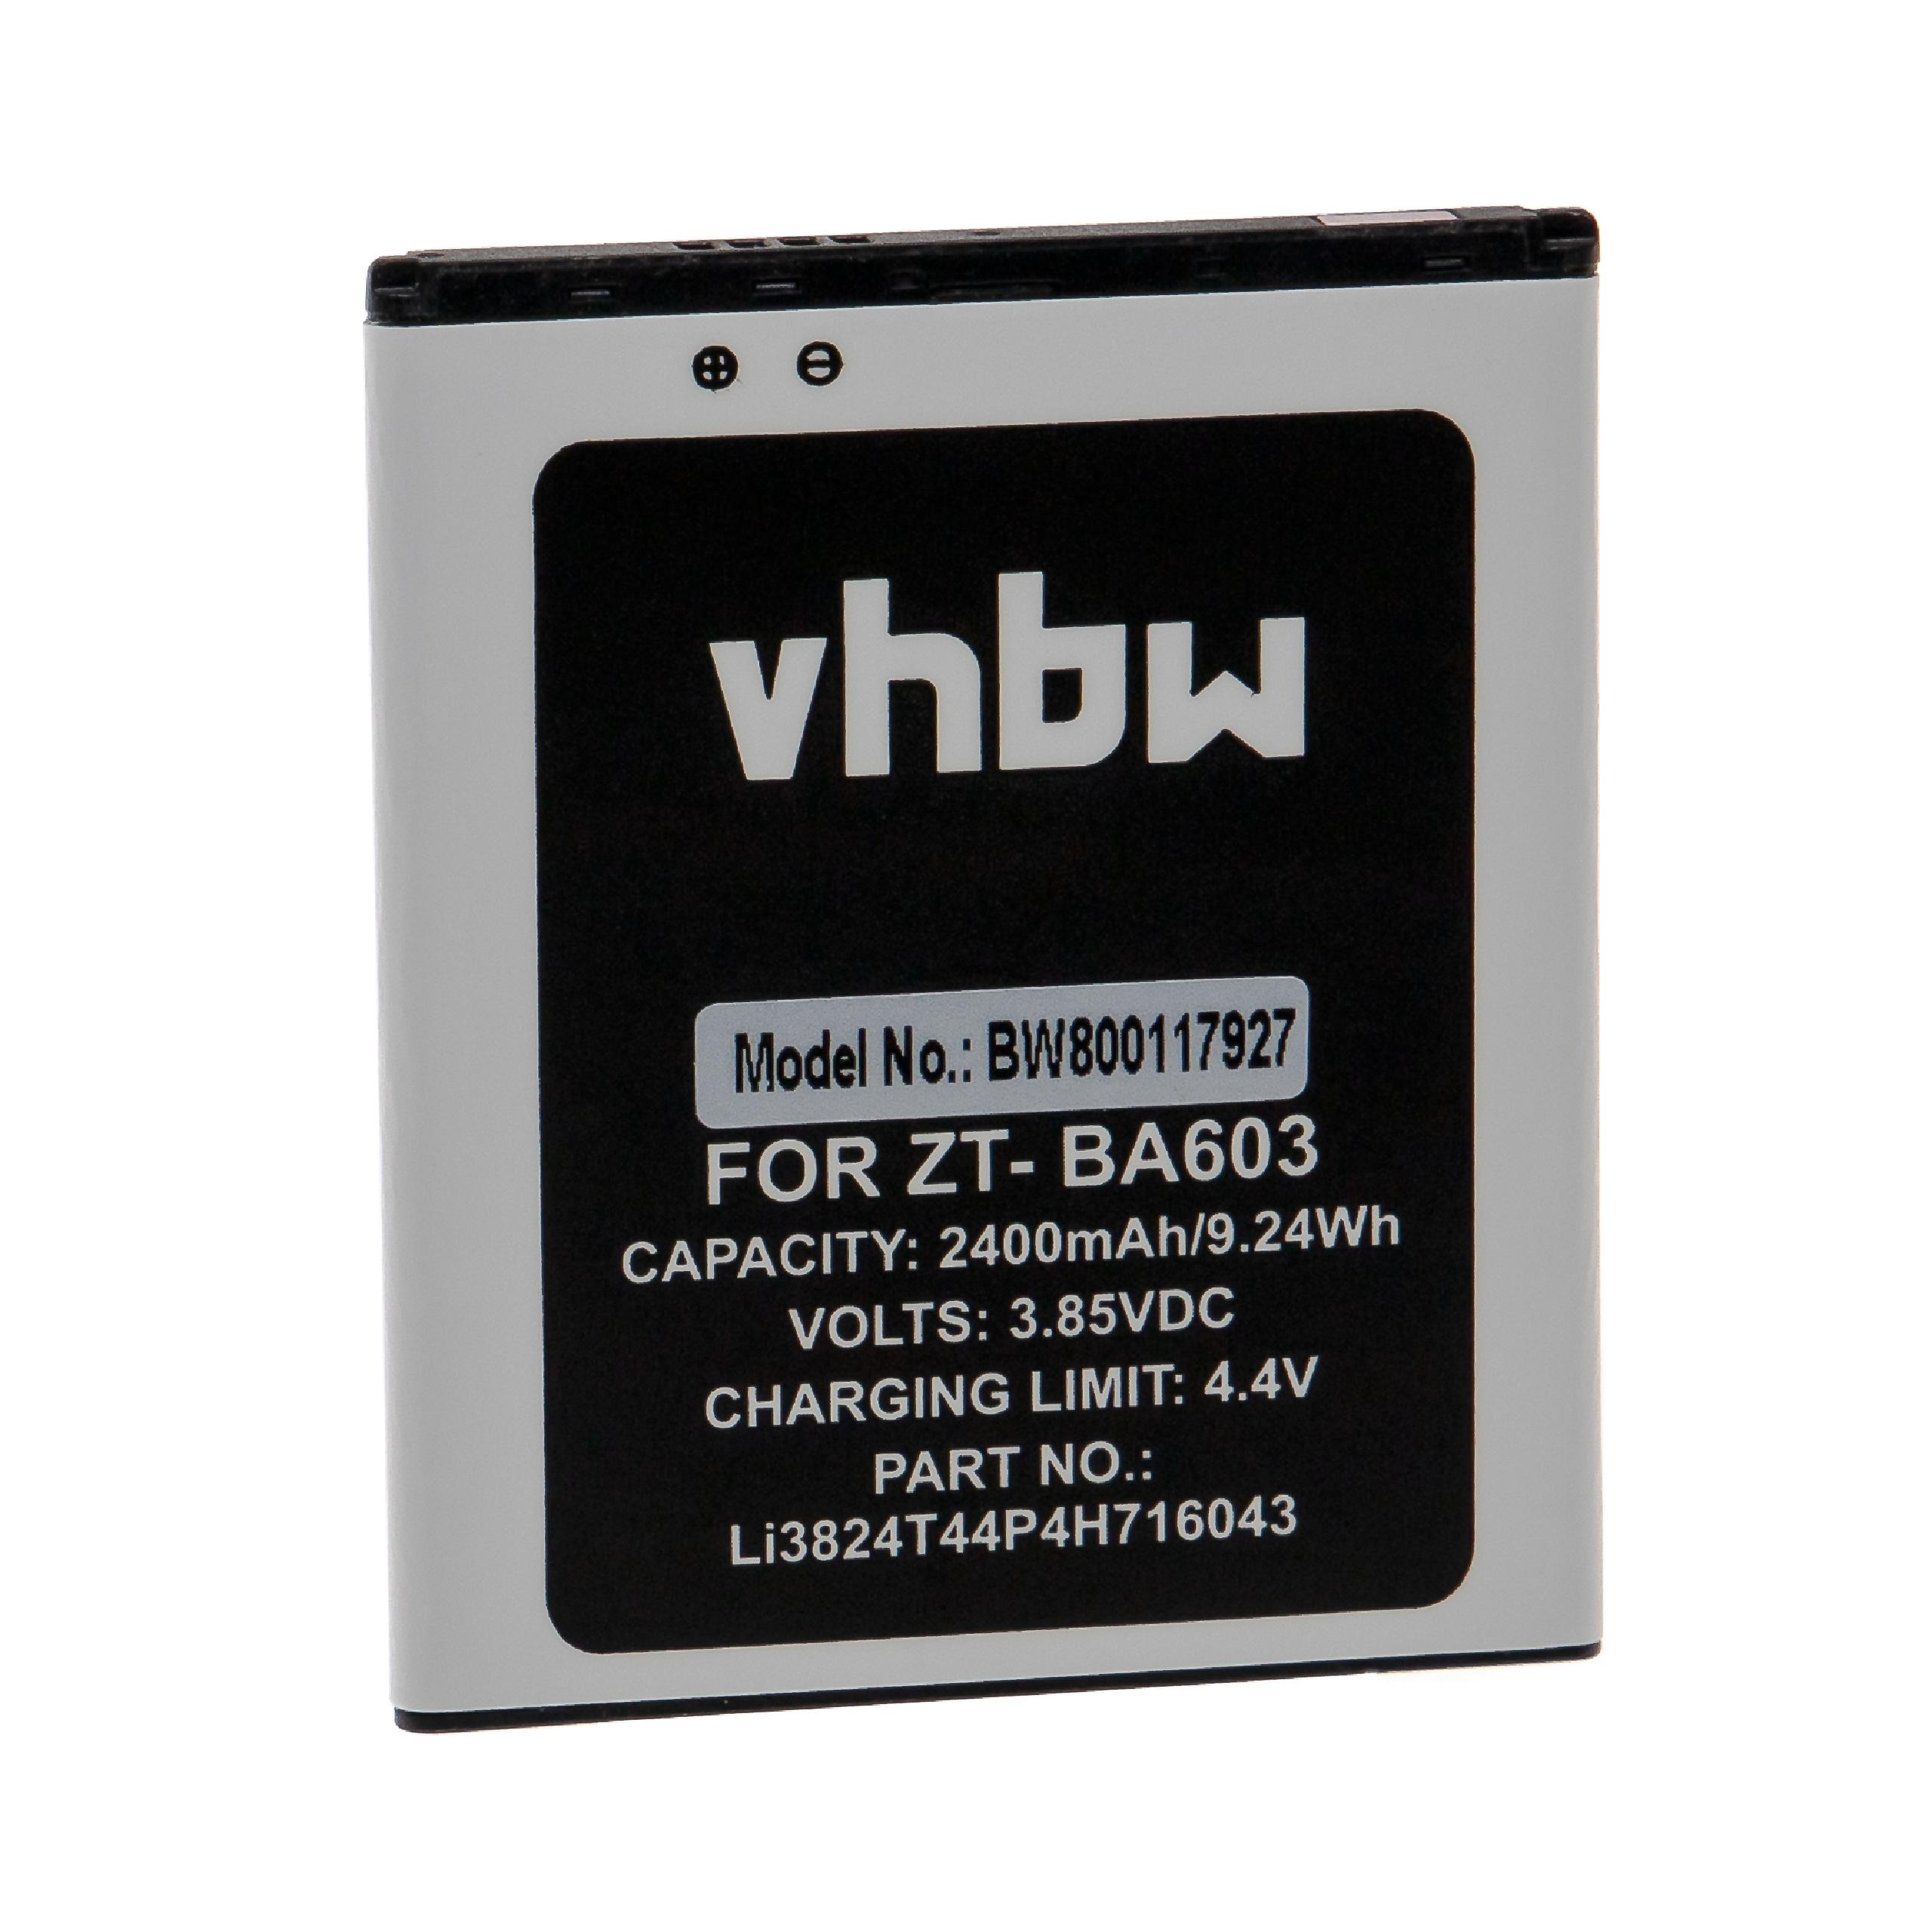 Mobile Phone Battery Replacement for ZTE Li3824T44P4H716043 - 2400mAh 3.85V Li-Ion